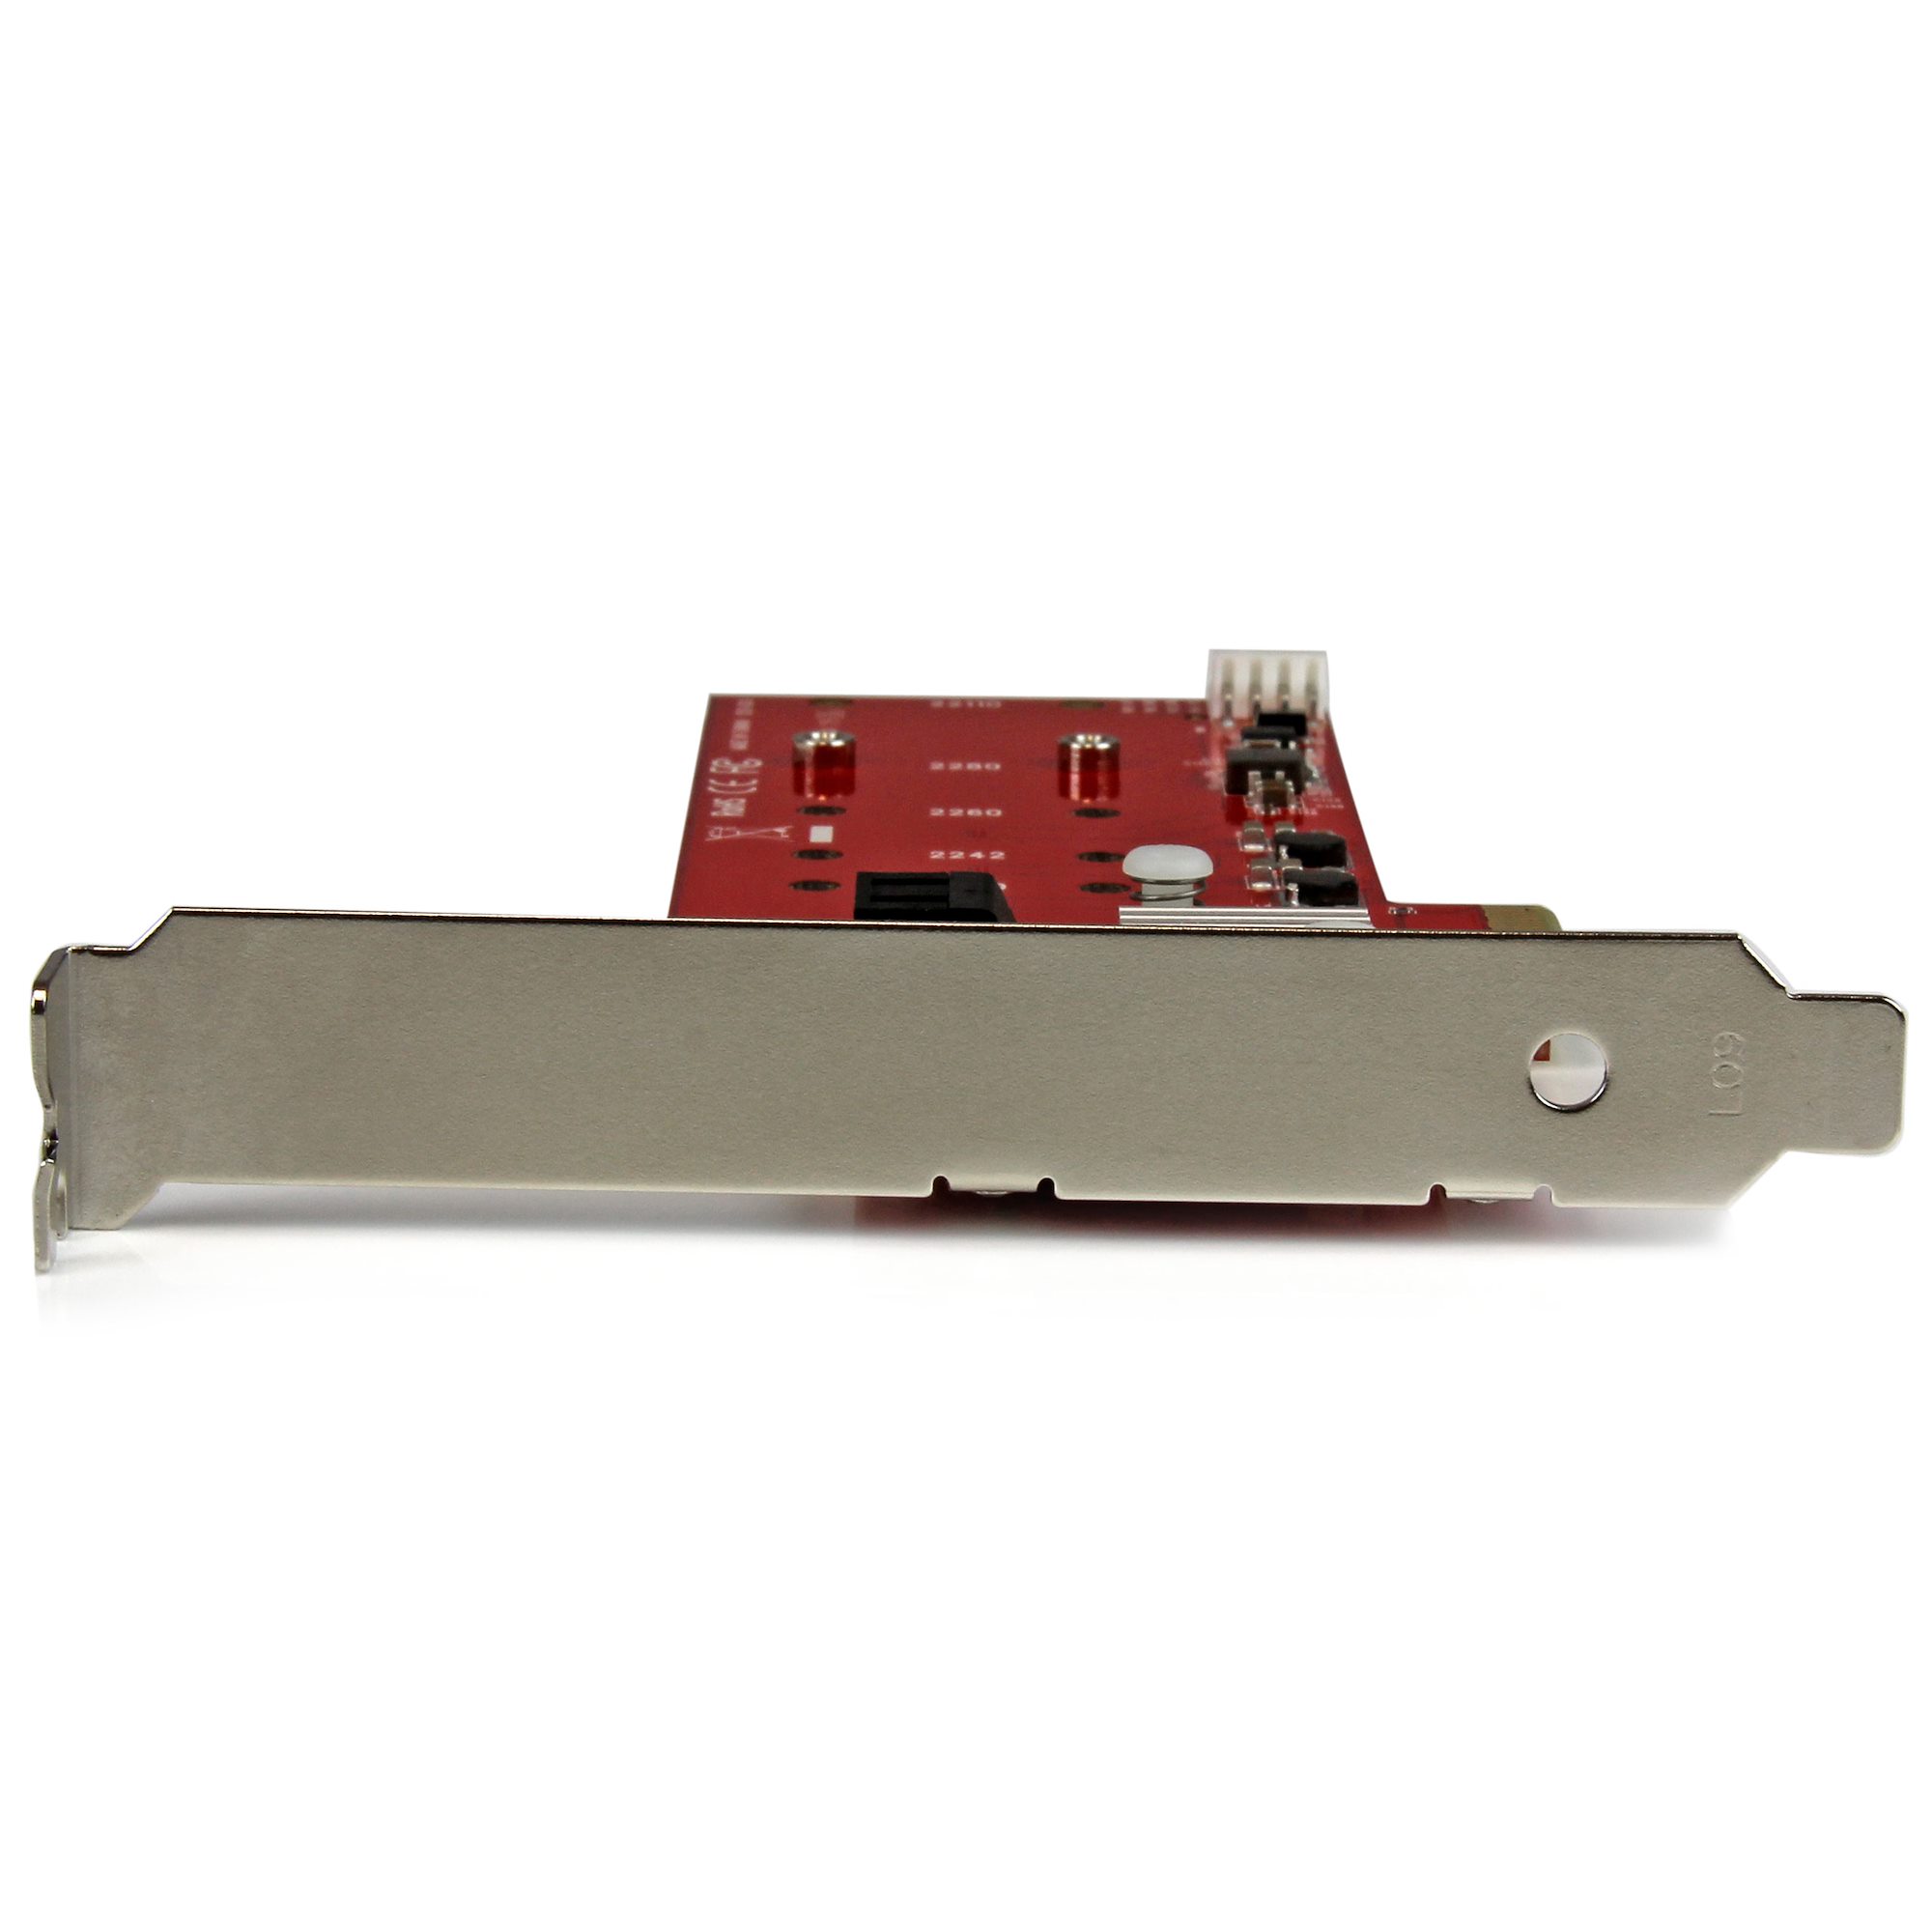 M.2 RAID Controller Card + 2x SATA Ports - SATA Controller Cards